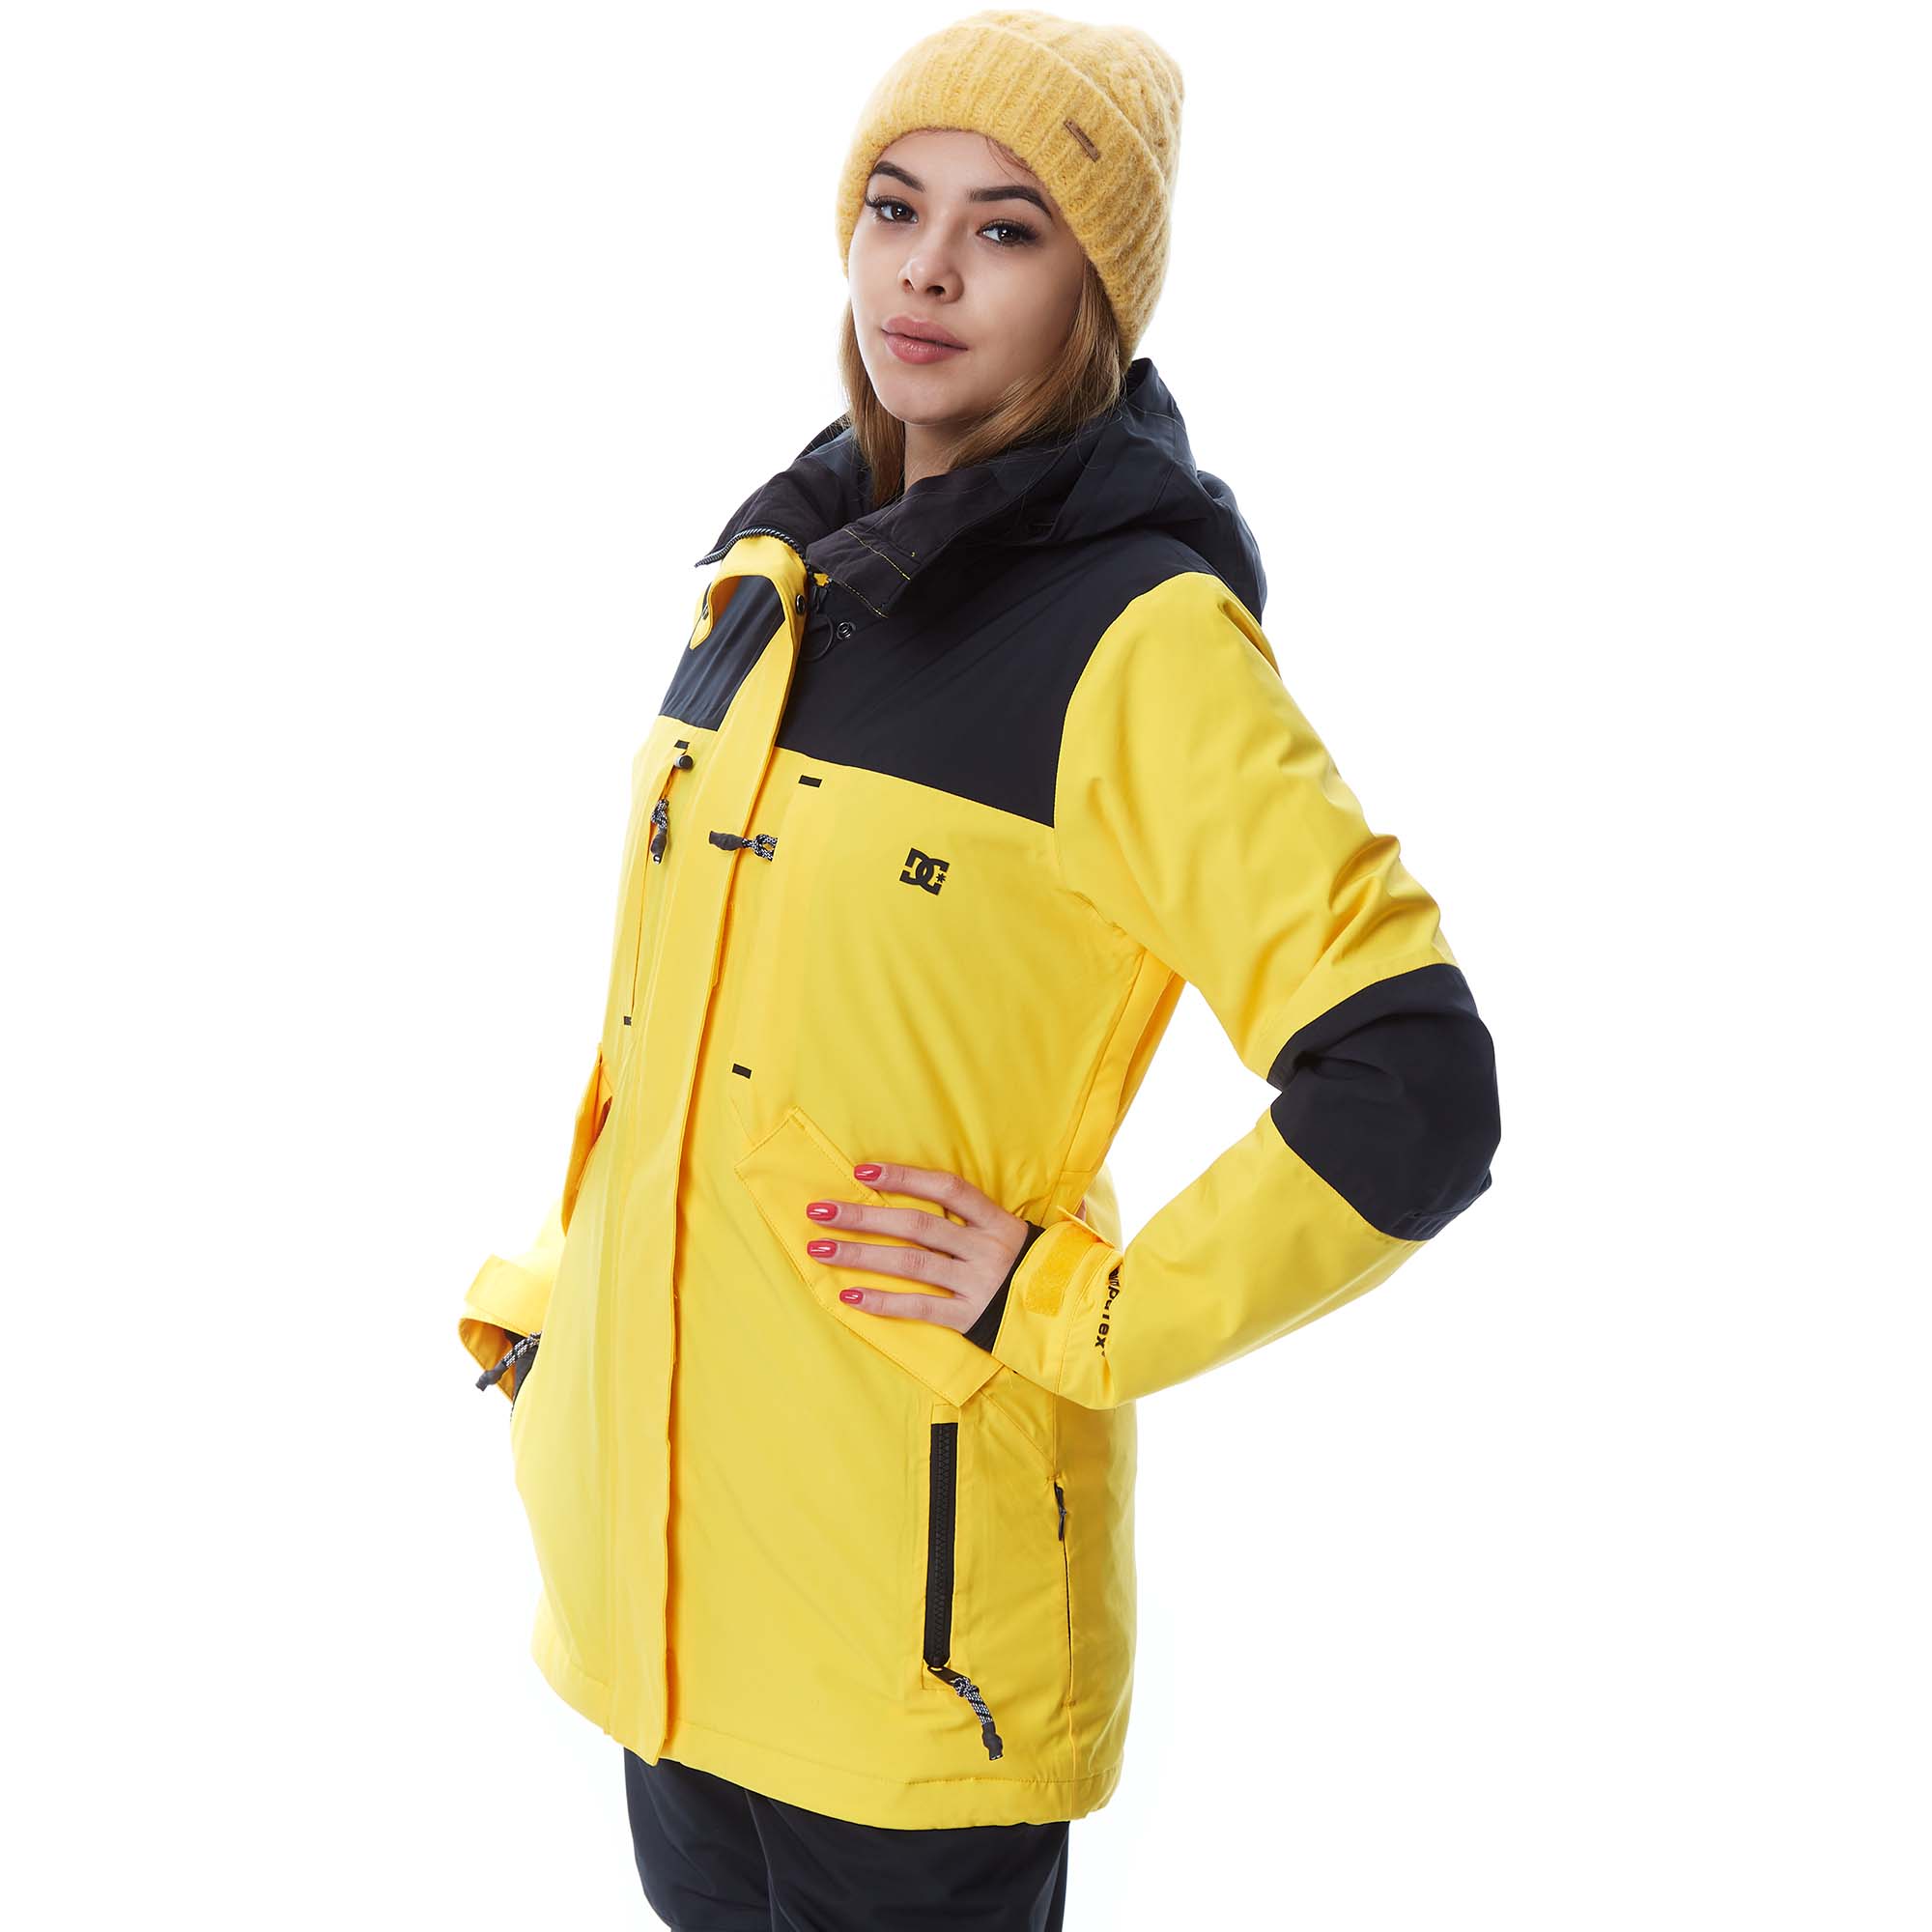 DC Sovereign Women's Ski/Snowboard Insulated Jacket